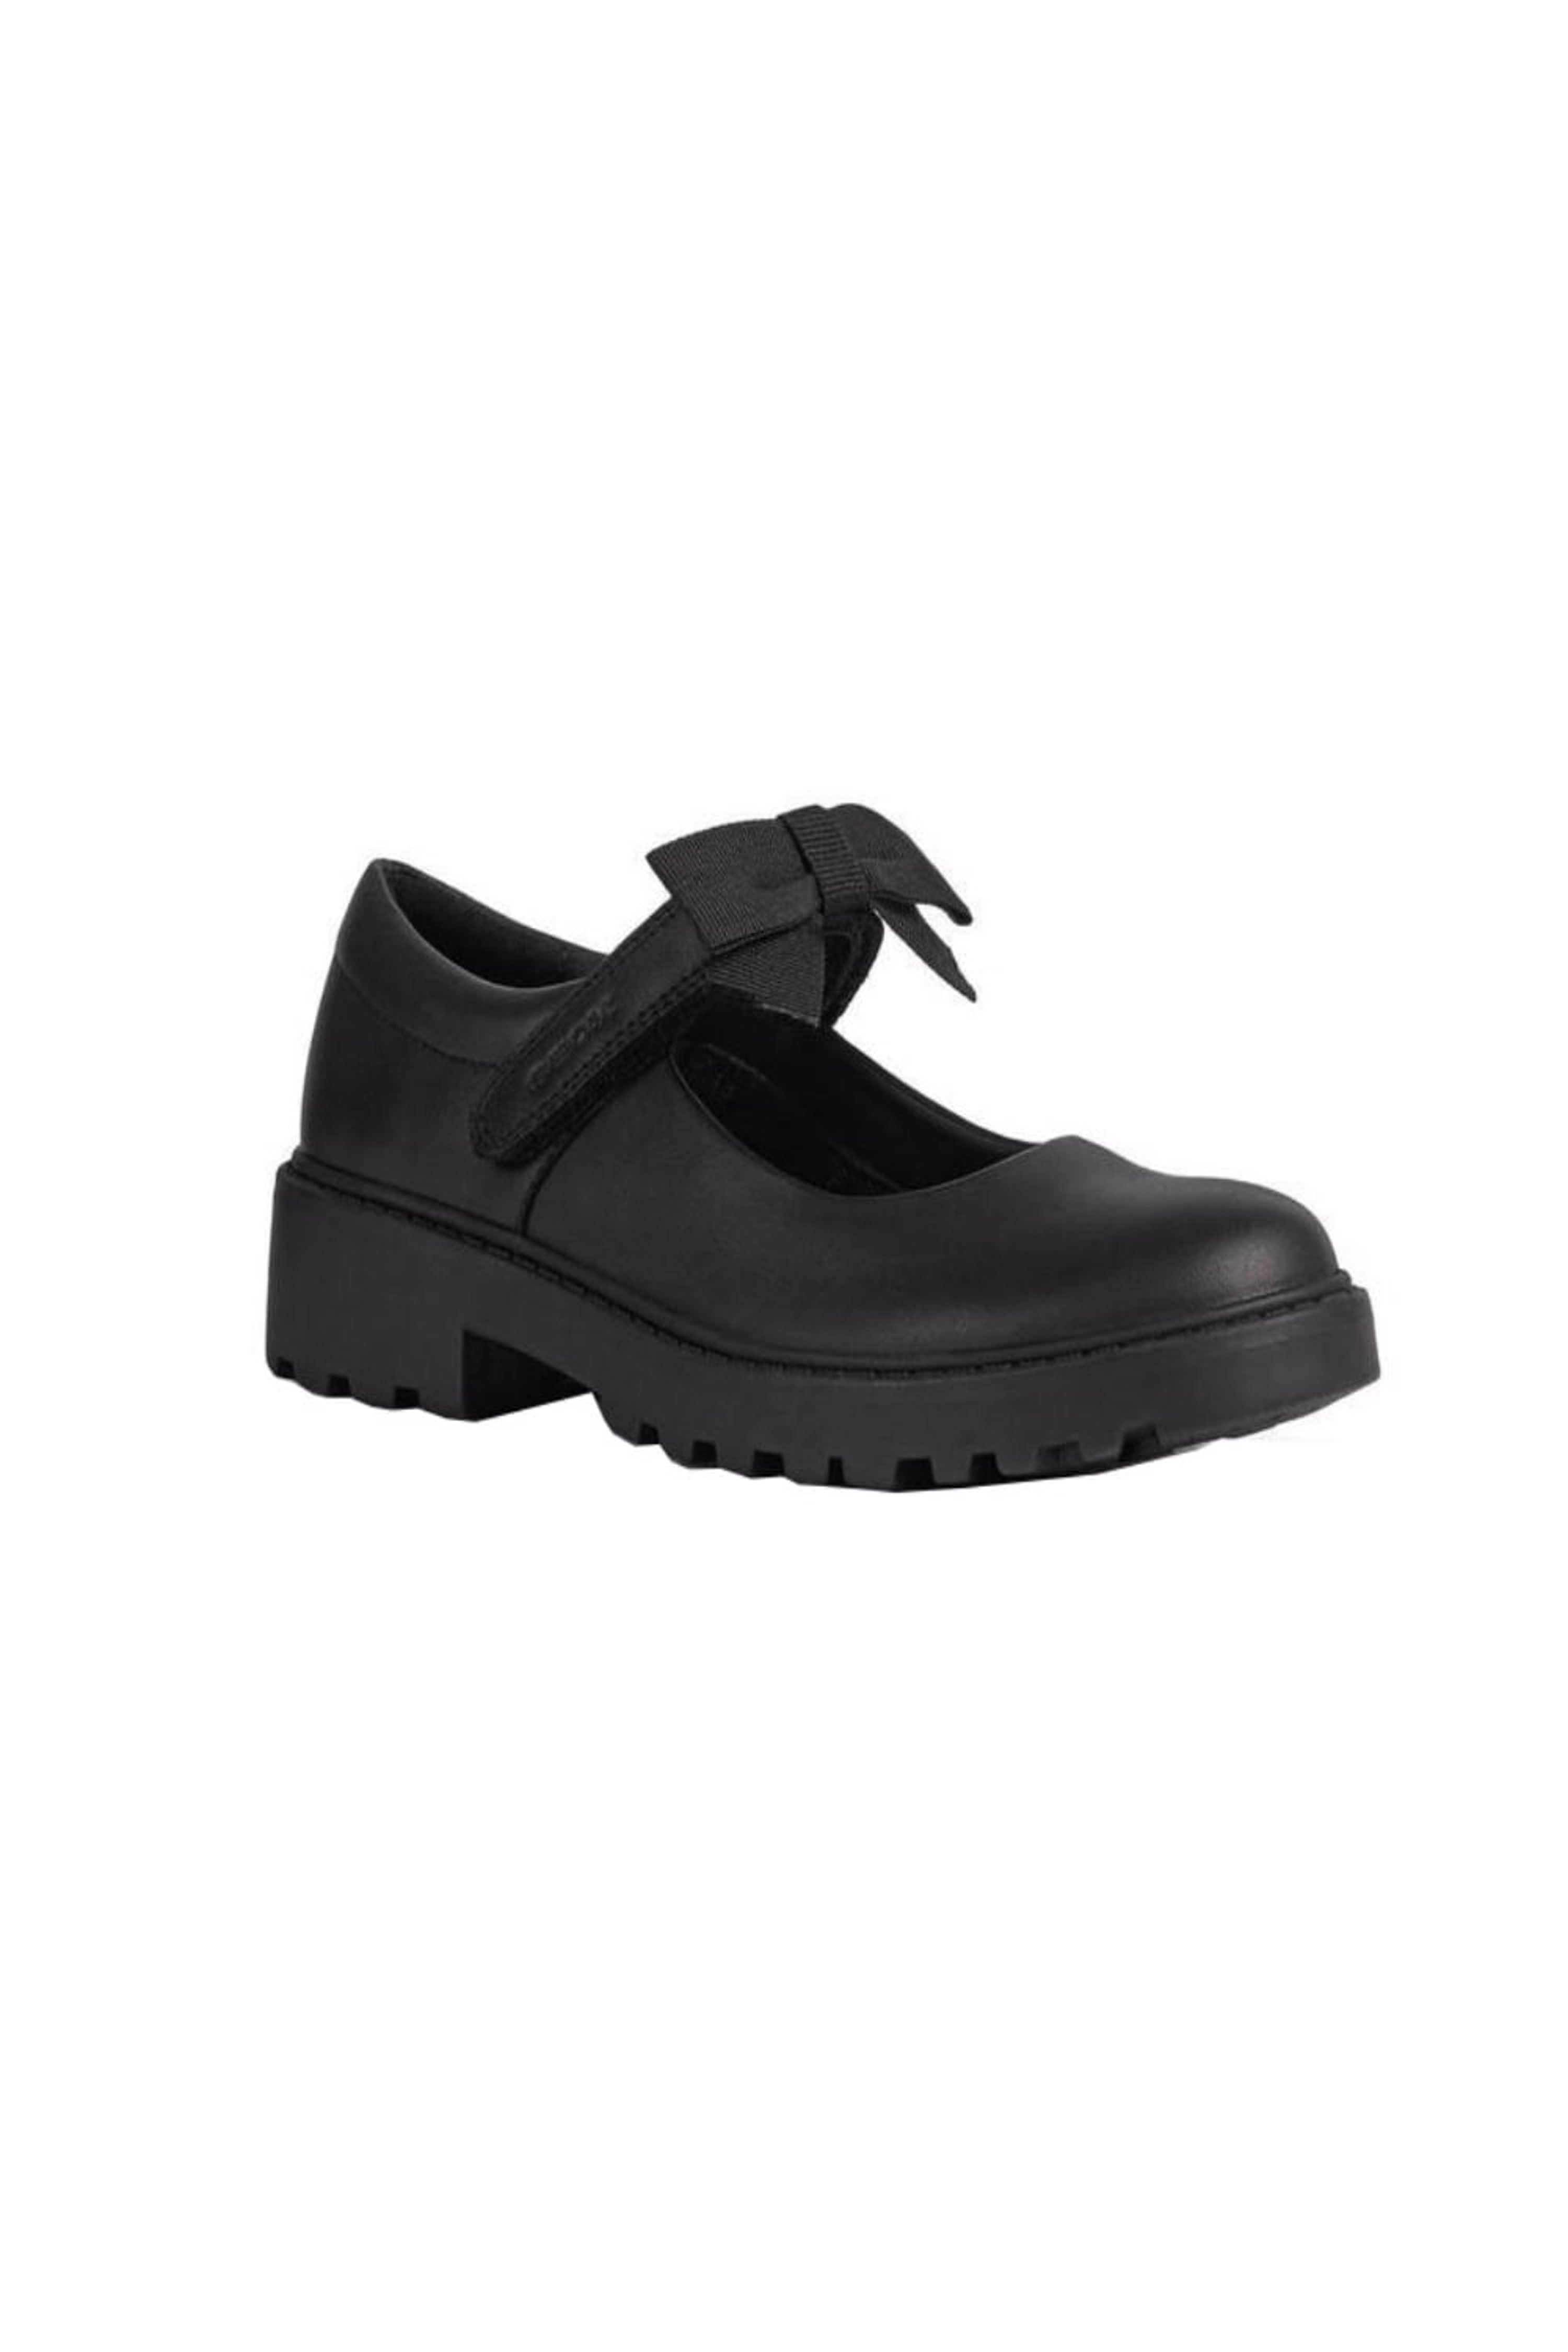 GEOX Girls Smart & Stylish Touch Fasten School Shoes Black 